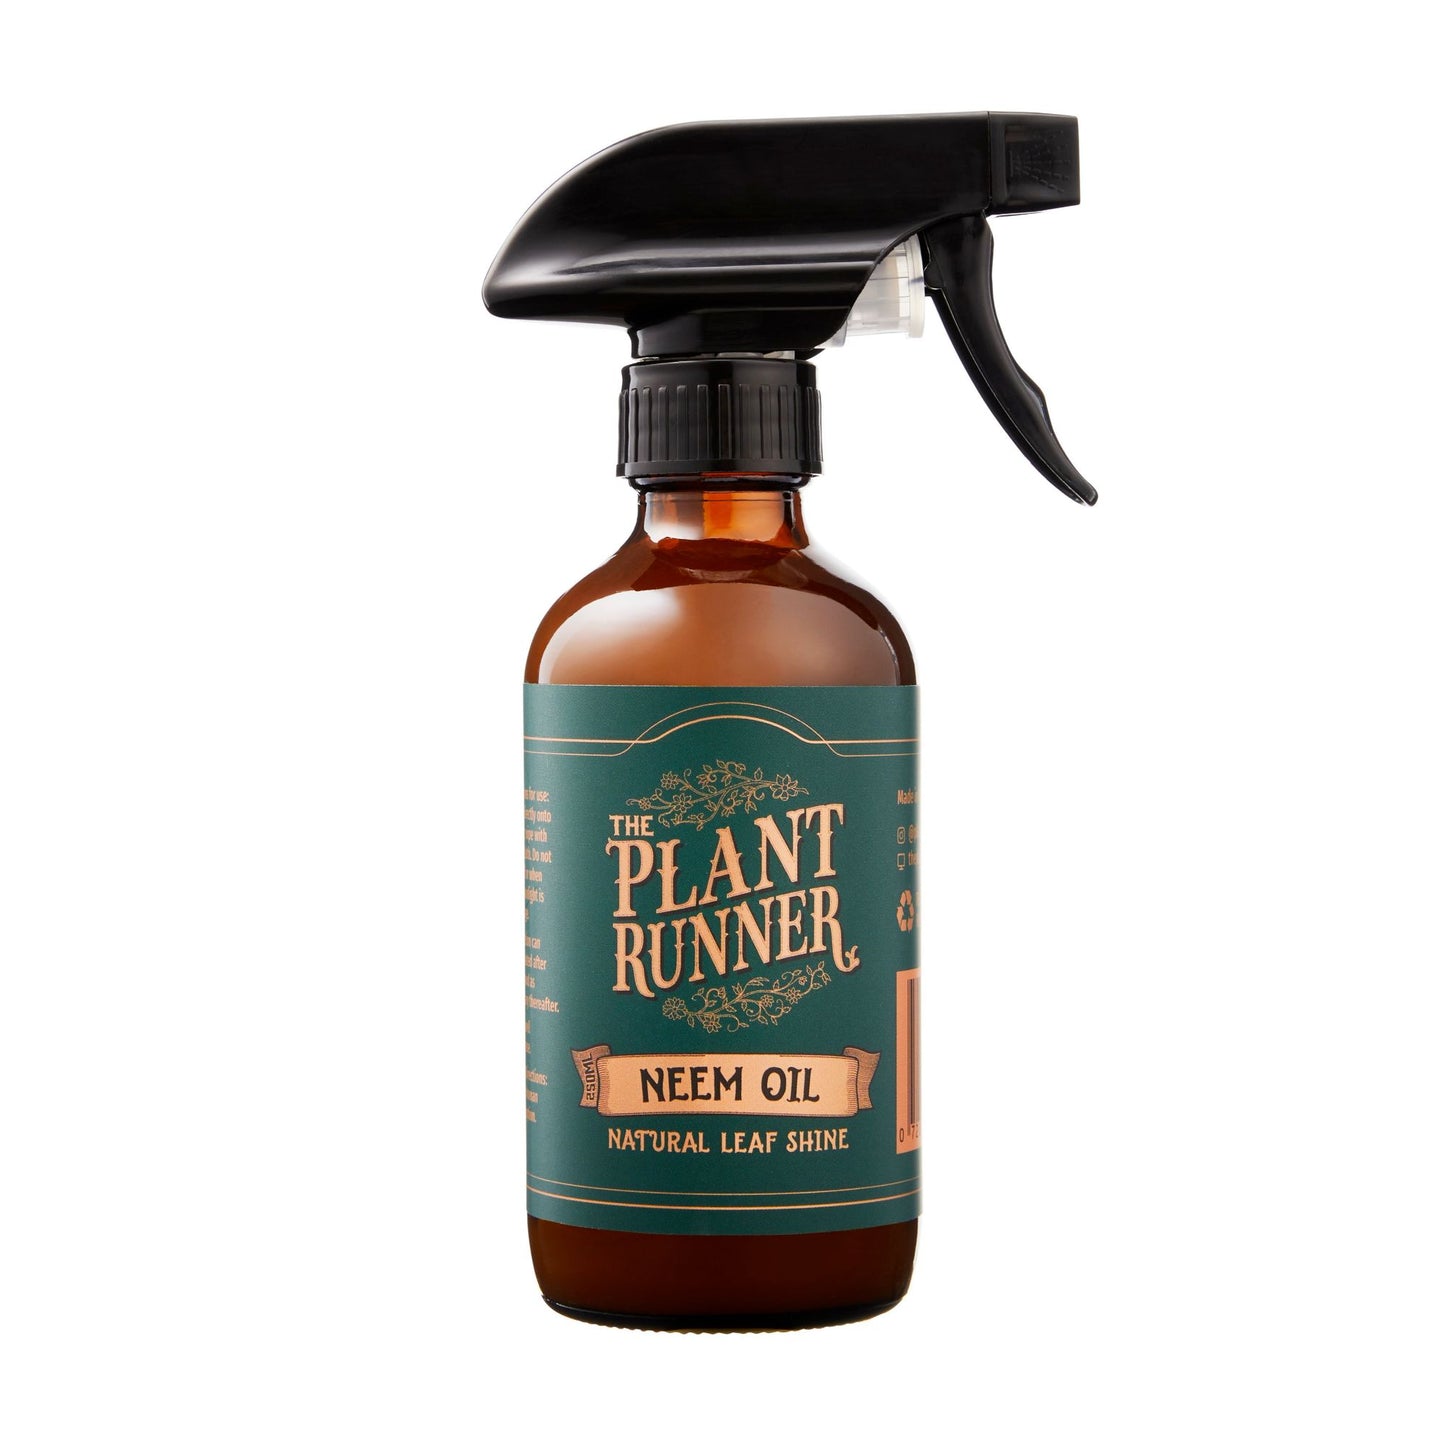 The Plant Runner Neem Oil, Natural Leaf Shine for Indoor Plants